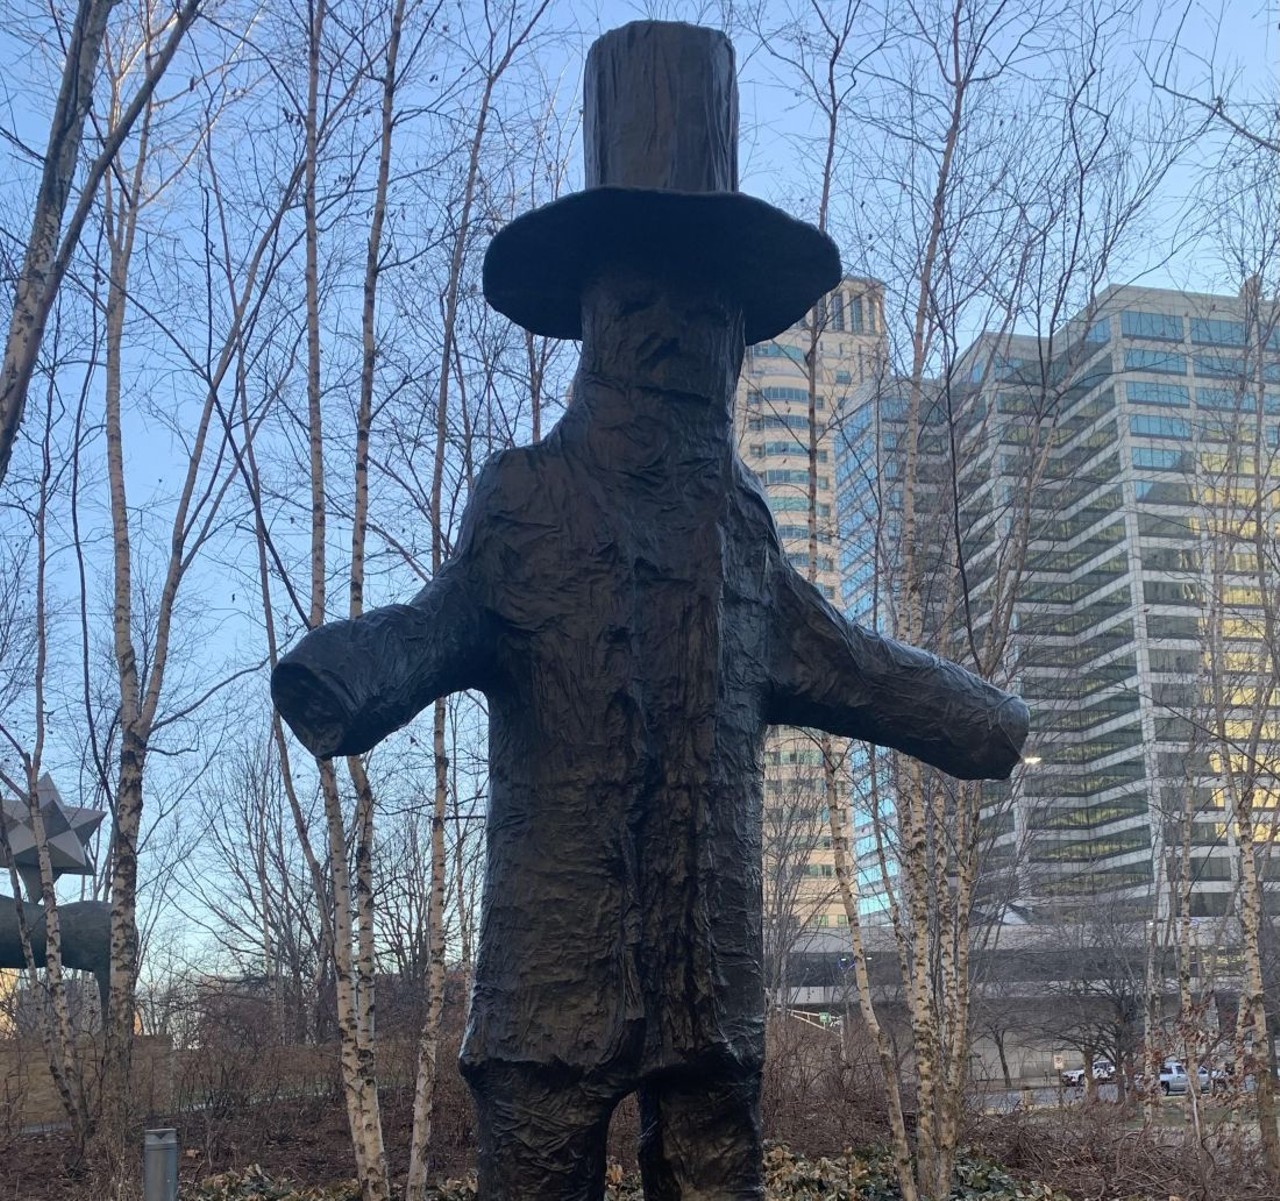 "Scarecrow"
Citygarden Sculpture Park (801 Market Street)
Sculpted by American artist Donald Baechler.
Photo credit: Riverfront Times / @riverfronttimes on Instagram